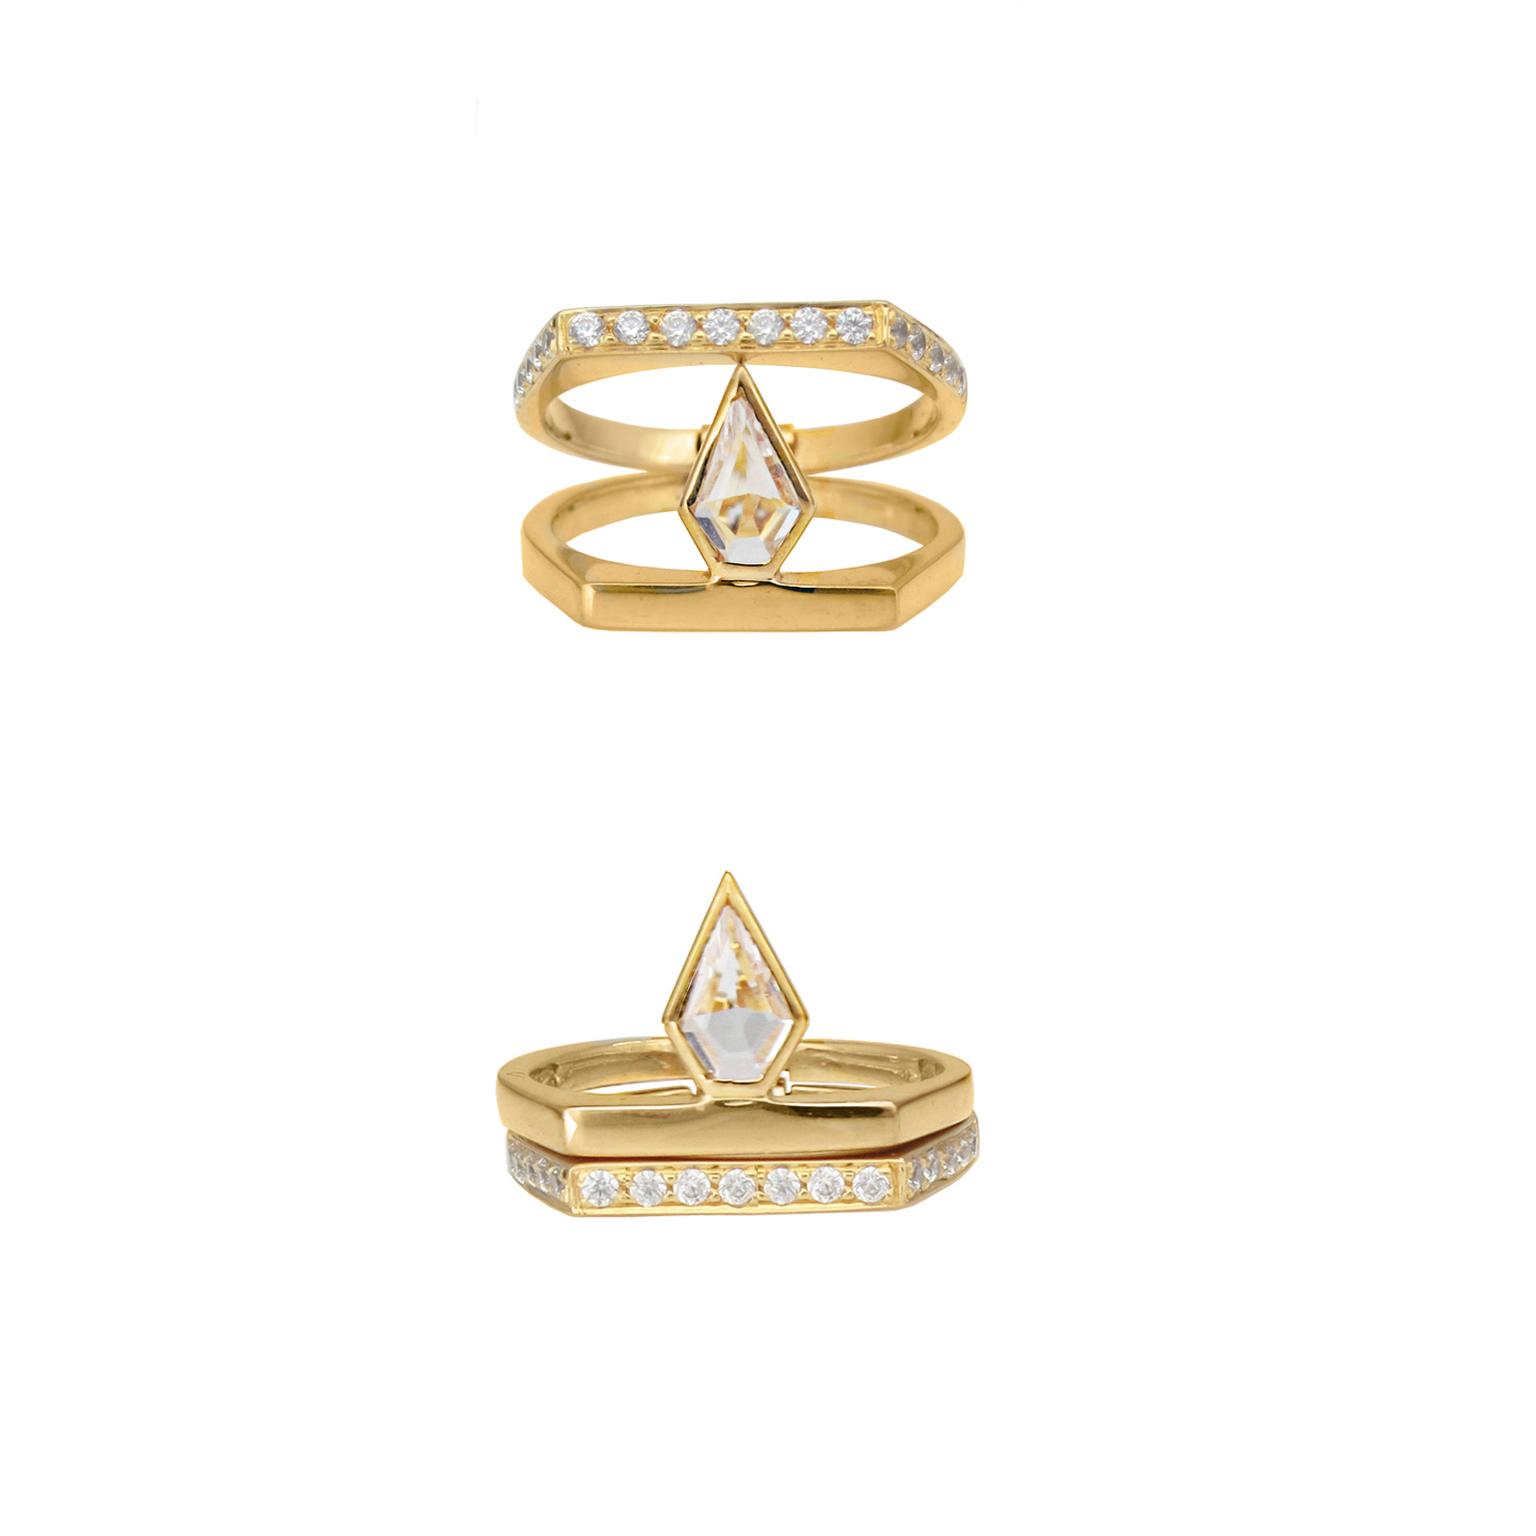 Rachel Boston transformable sapphire and diamond ring